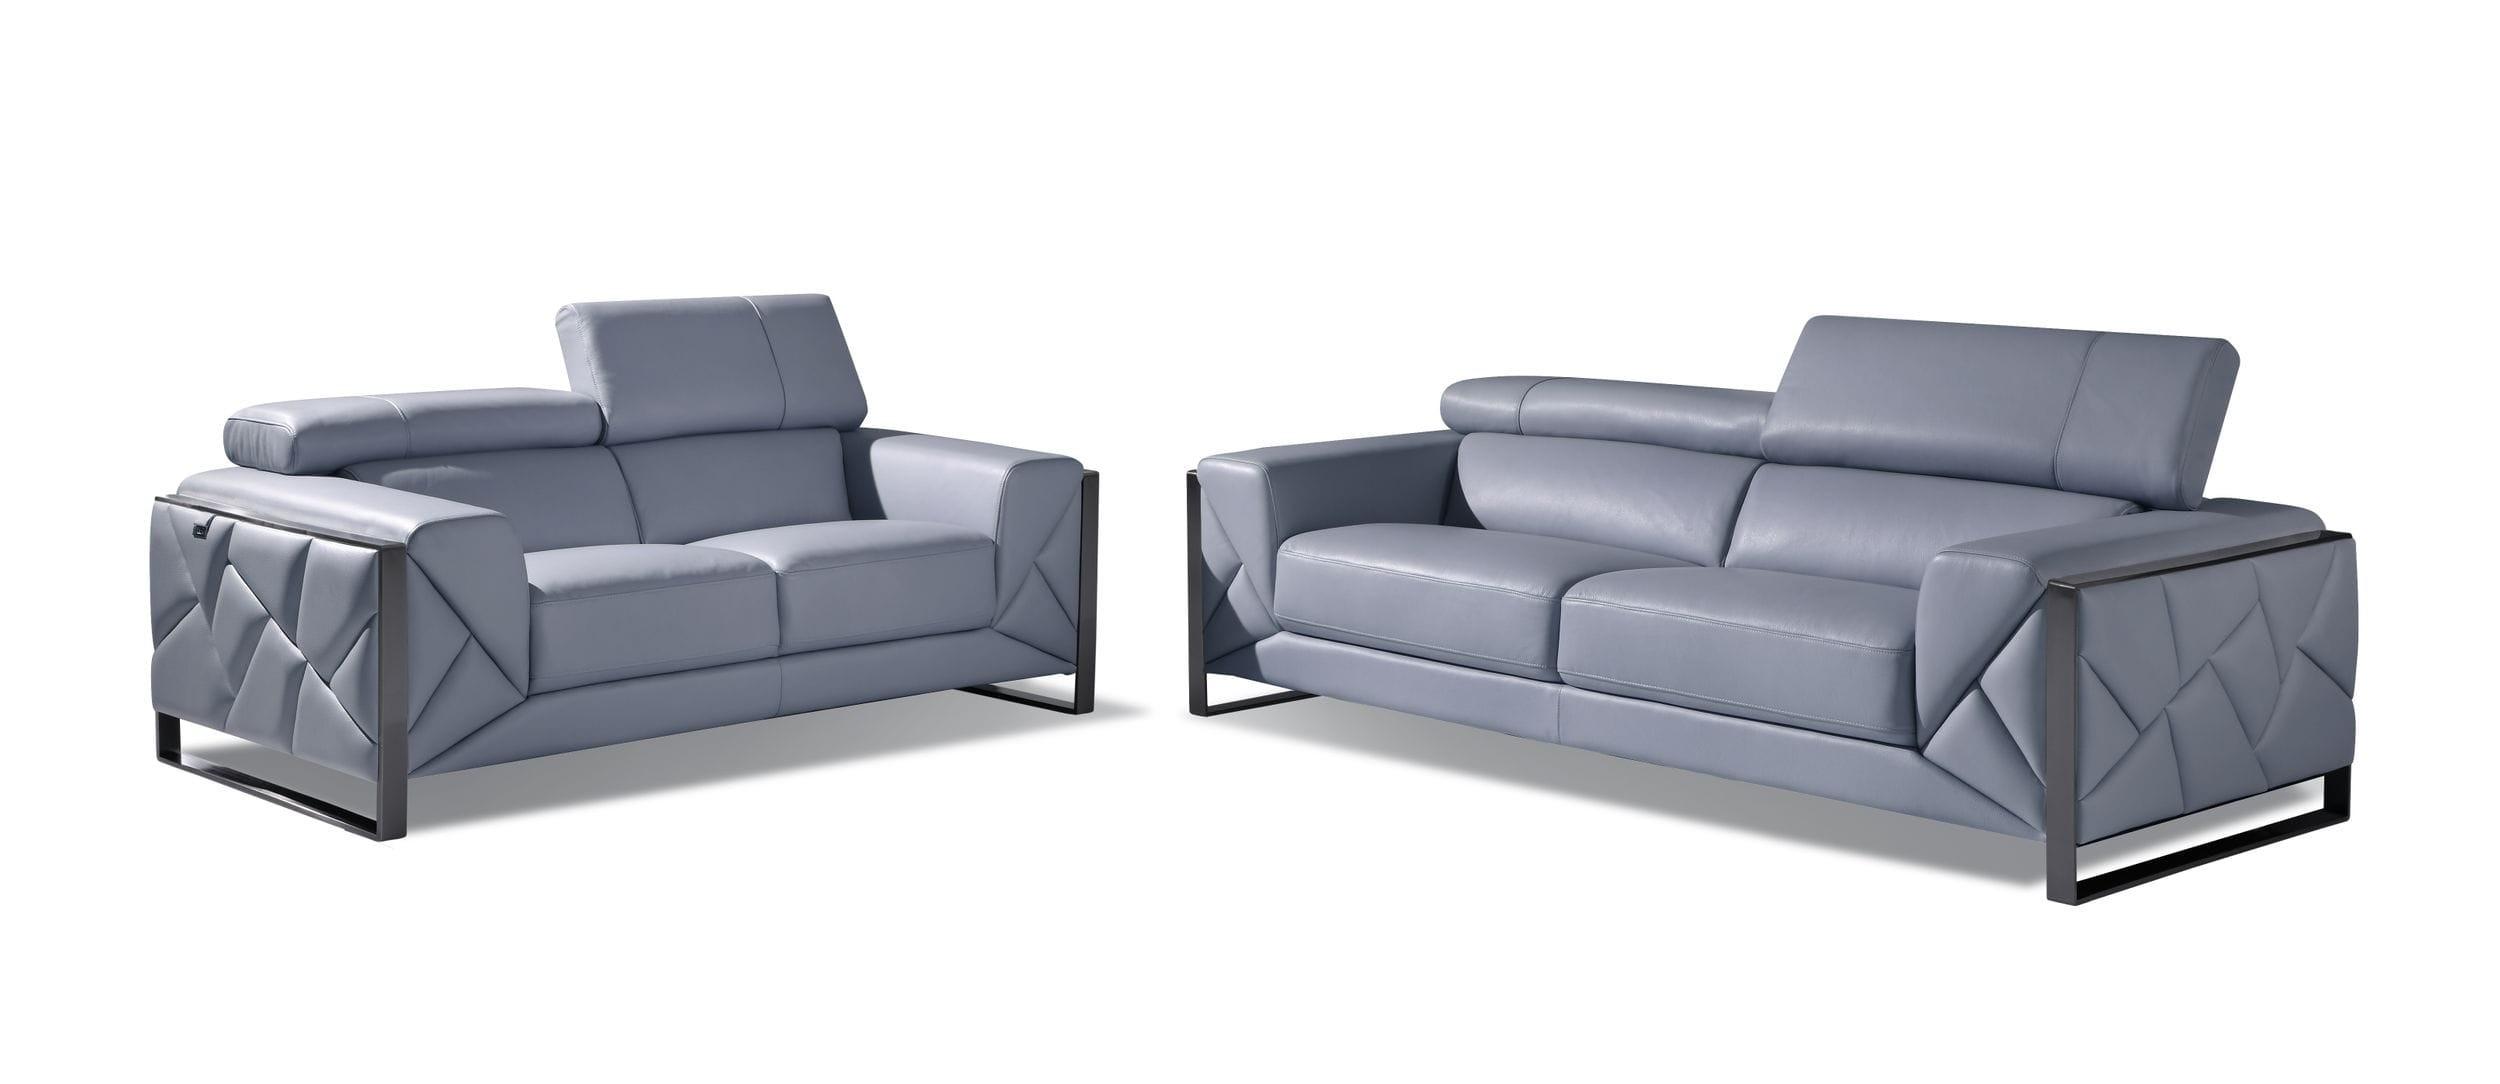 Contemporary Sofa and Loveseat Set 903 903-LIGHT_BLUE-2PC in Light Blue Genuine Italian Leatder